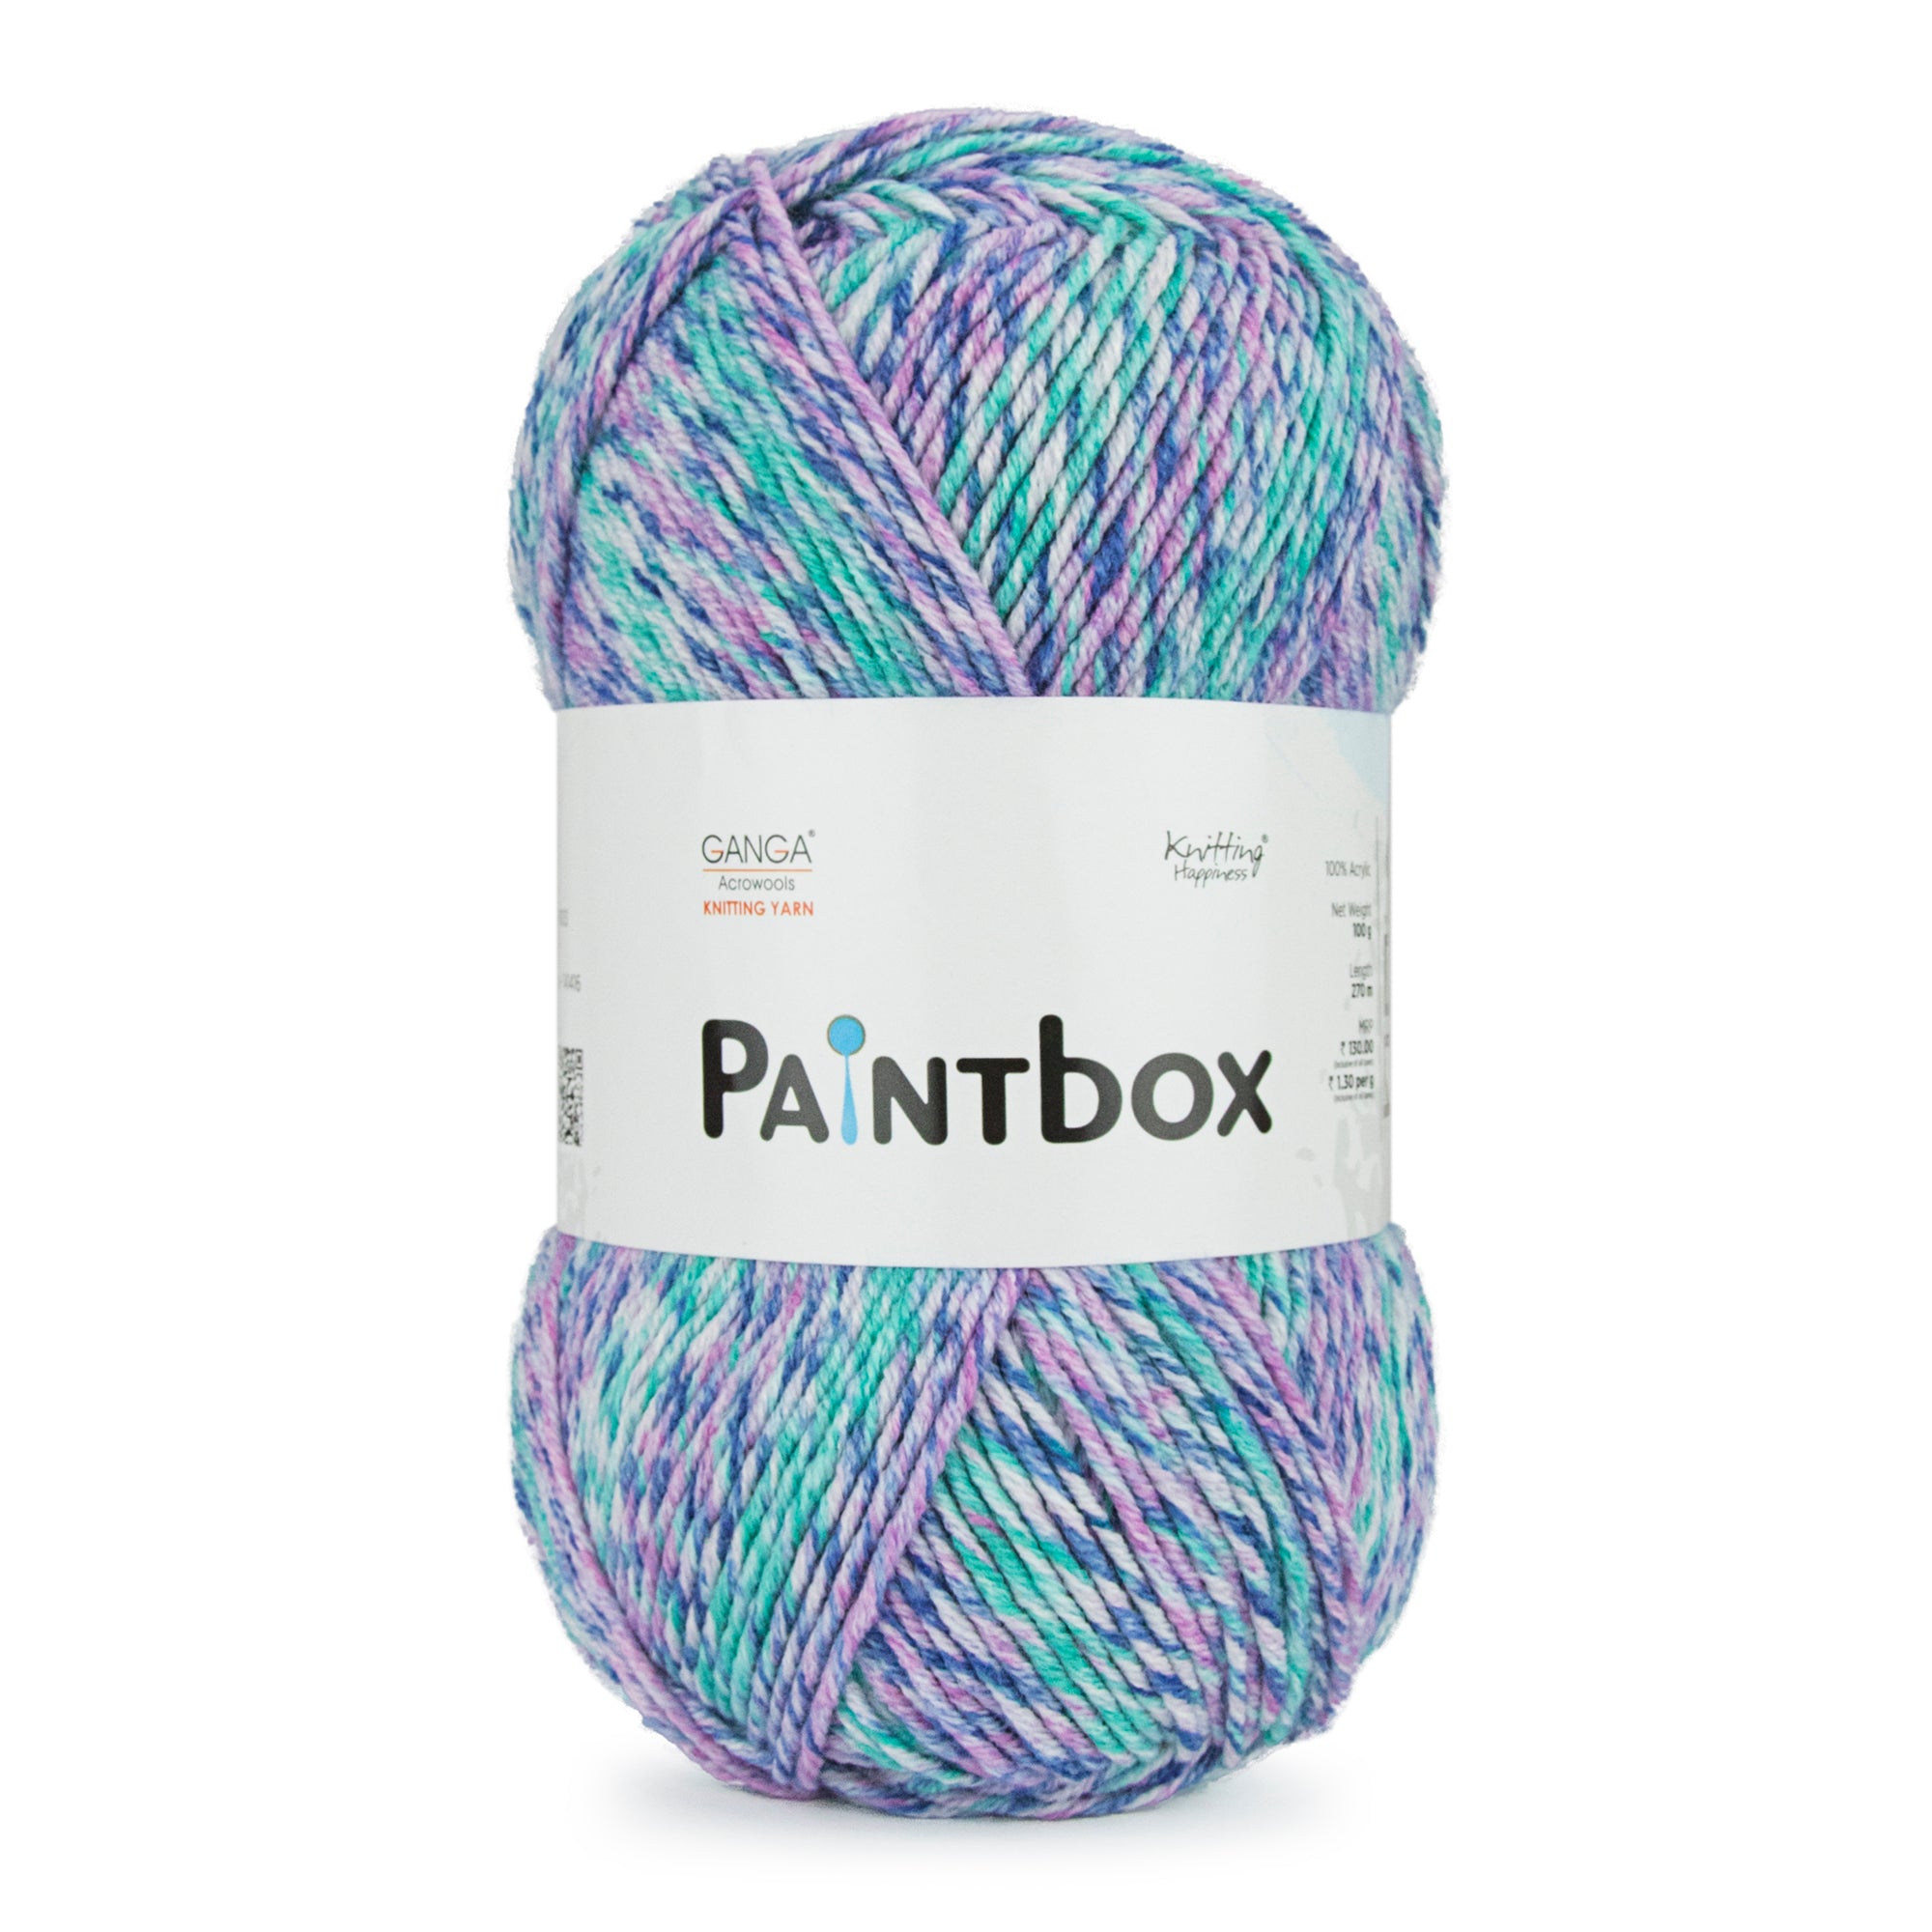 Paintbox Knitting Yarn